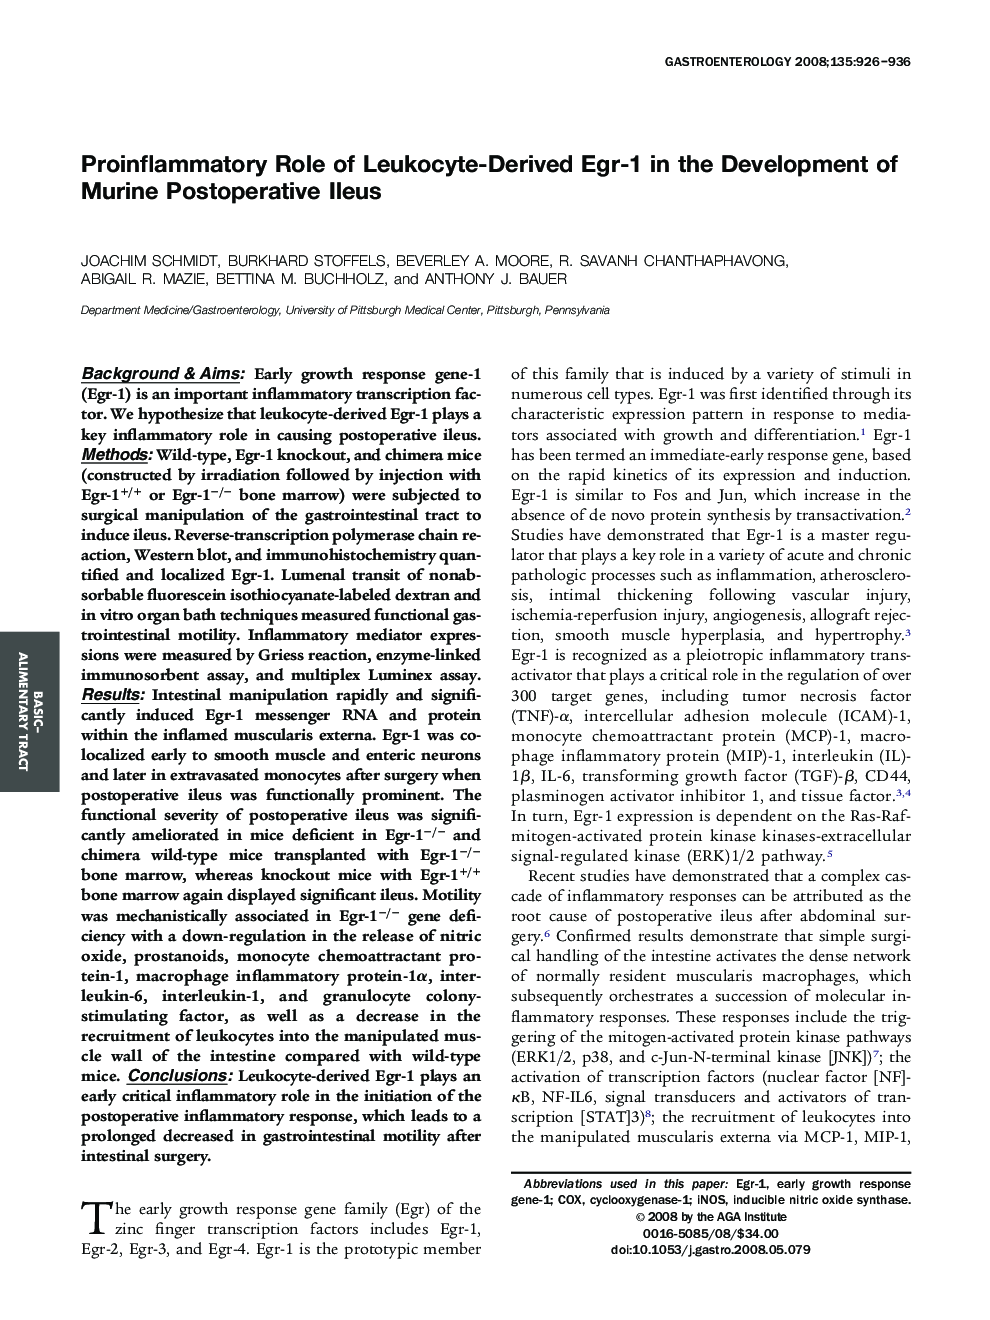 Proinflammatory Role of Leukocyte-Derived Egr-1 in the Development of Murine Postoperative Ileus